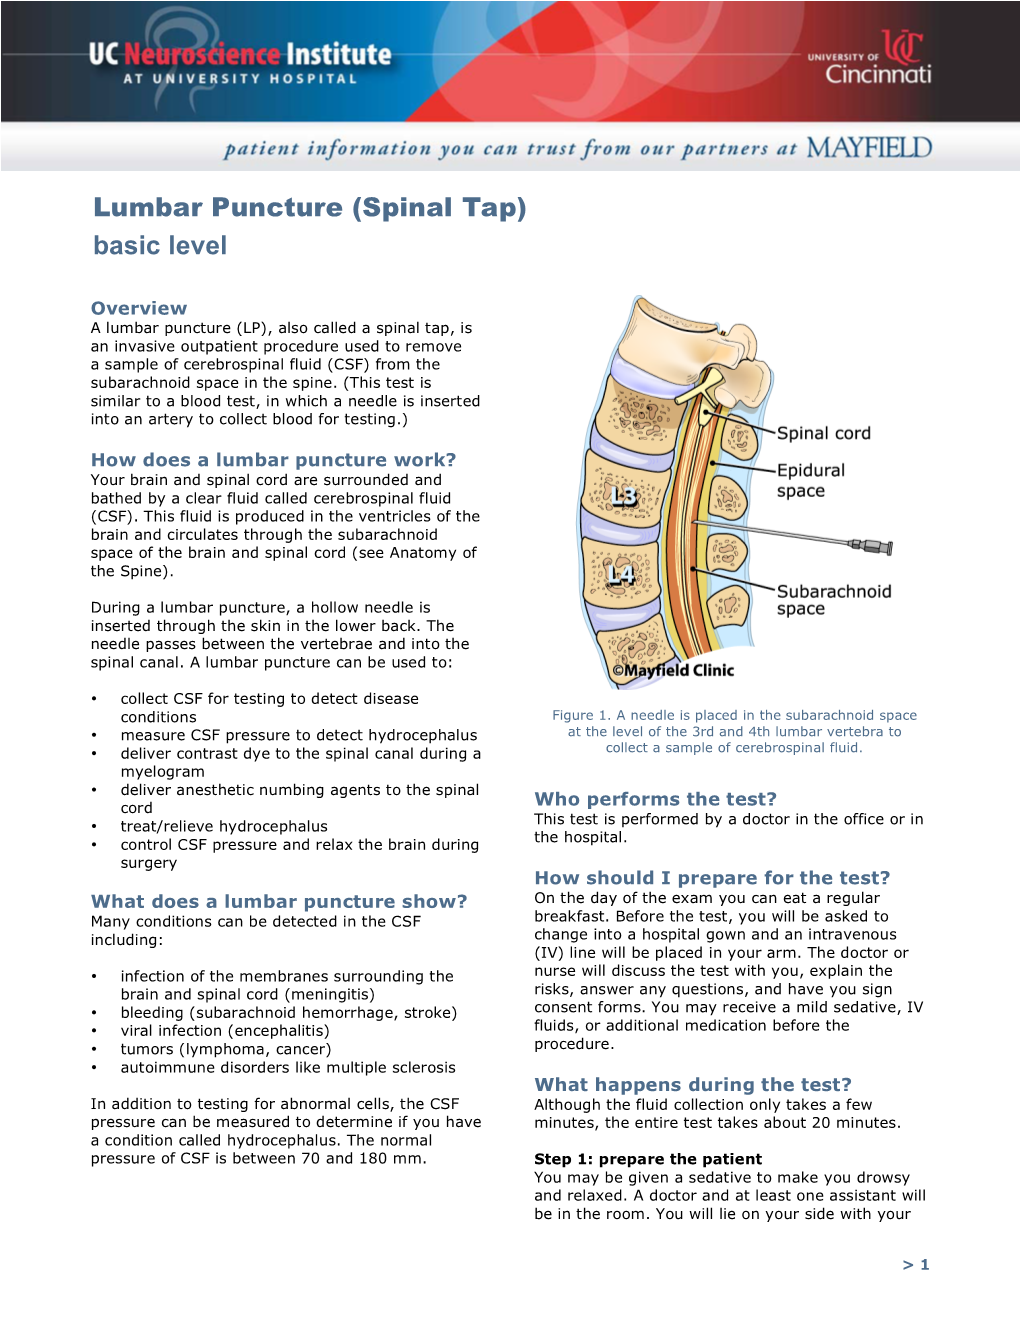 Lumbar Puncture (Spinal Tap) Basic Level